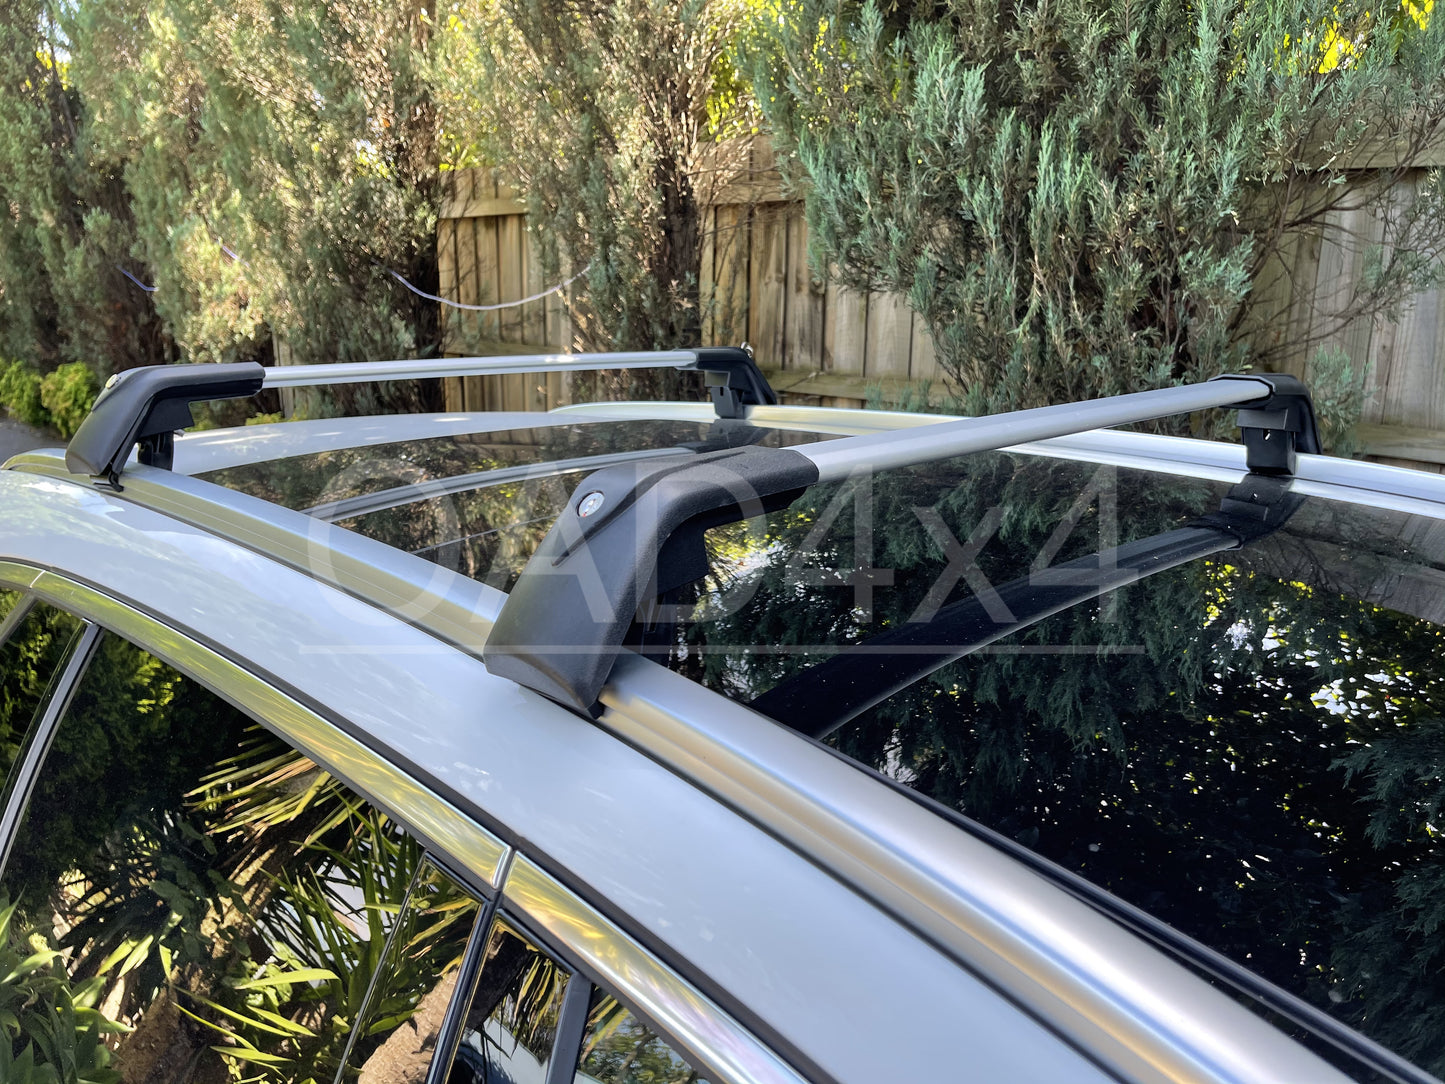 1 Pair Aluminum Silver Cross Bar Roof Racks Baggage Holder for BMW X3 2011-2017 Clamp in Flush Rail